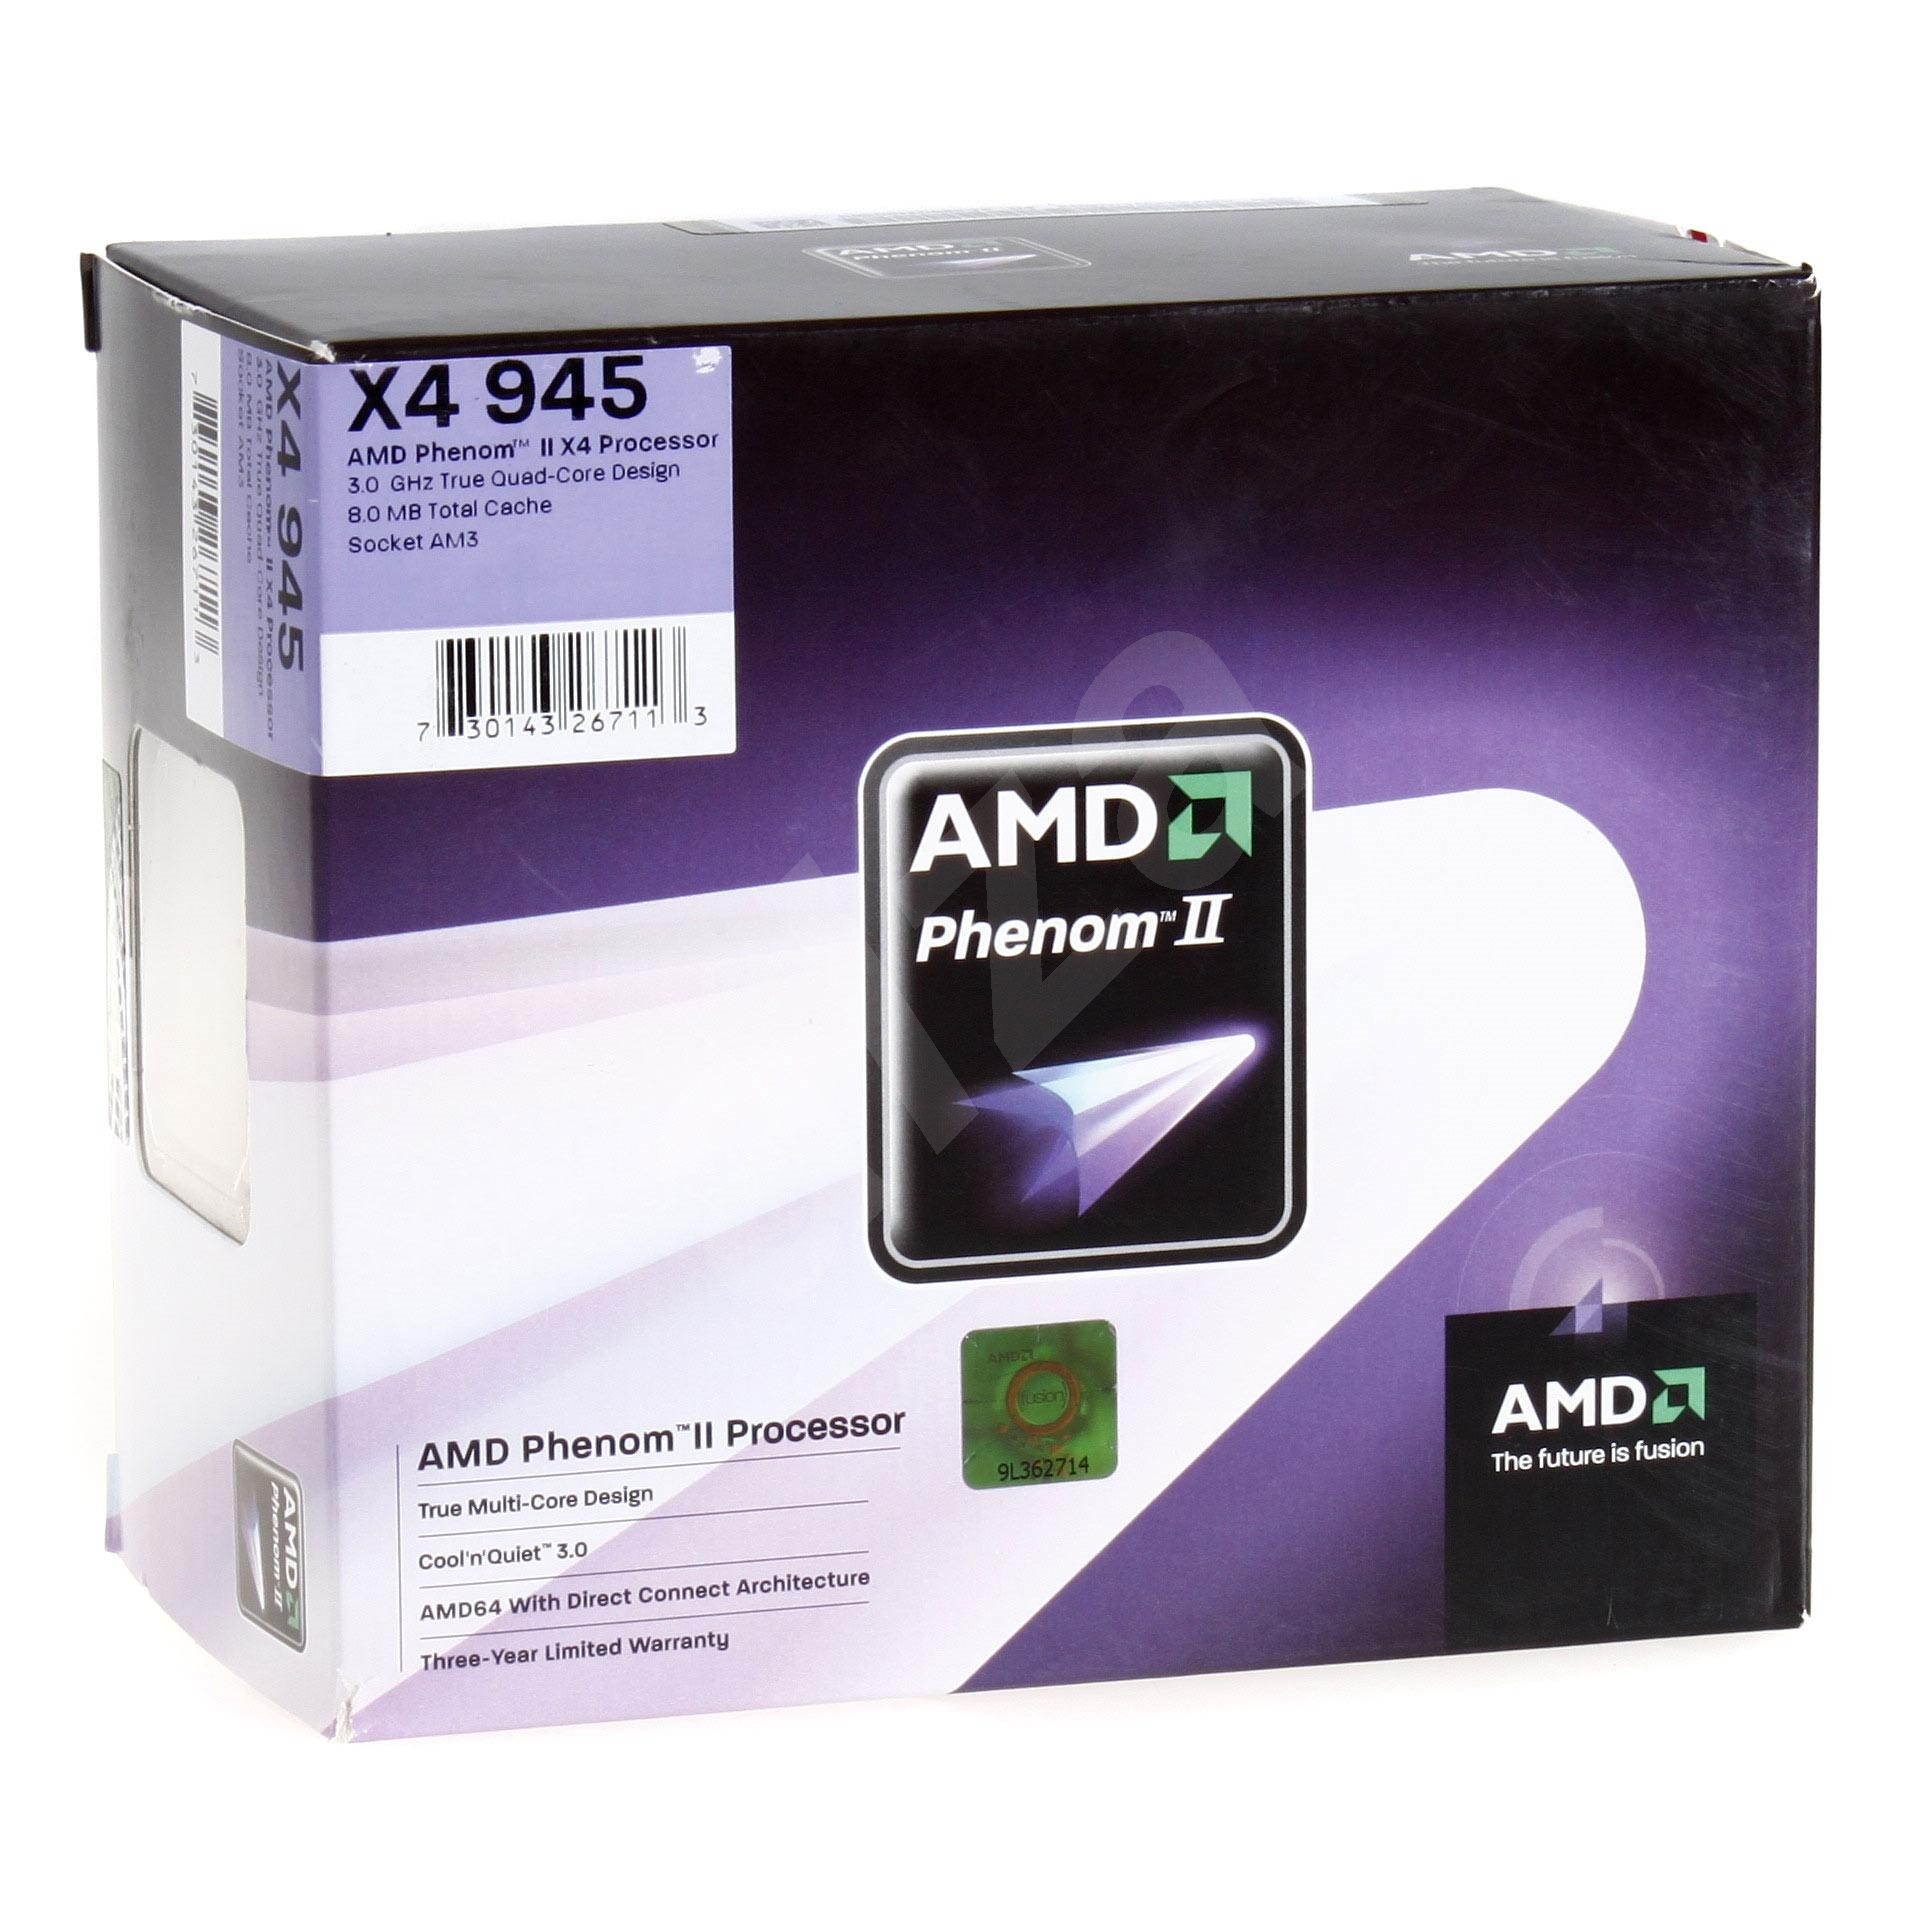 Amd phenom сравнение. AMD Phenom(TM) II x4 945 Processor. Процессор AMD Phenom II x4 945 характеристики. AMD Phenom TM 2 n930 Quad Core Processor 2.00 GHZ характеристики. АМД феном 2 х4 710 аналоги инвидиа.